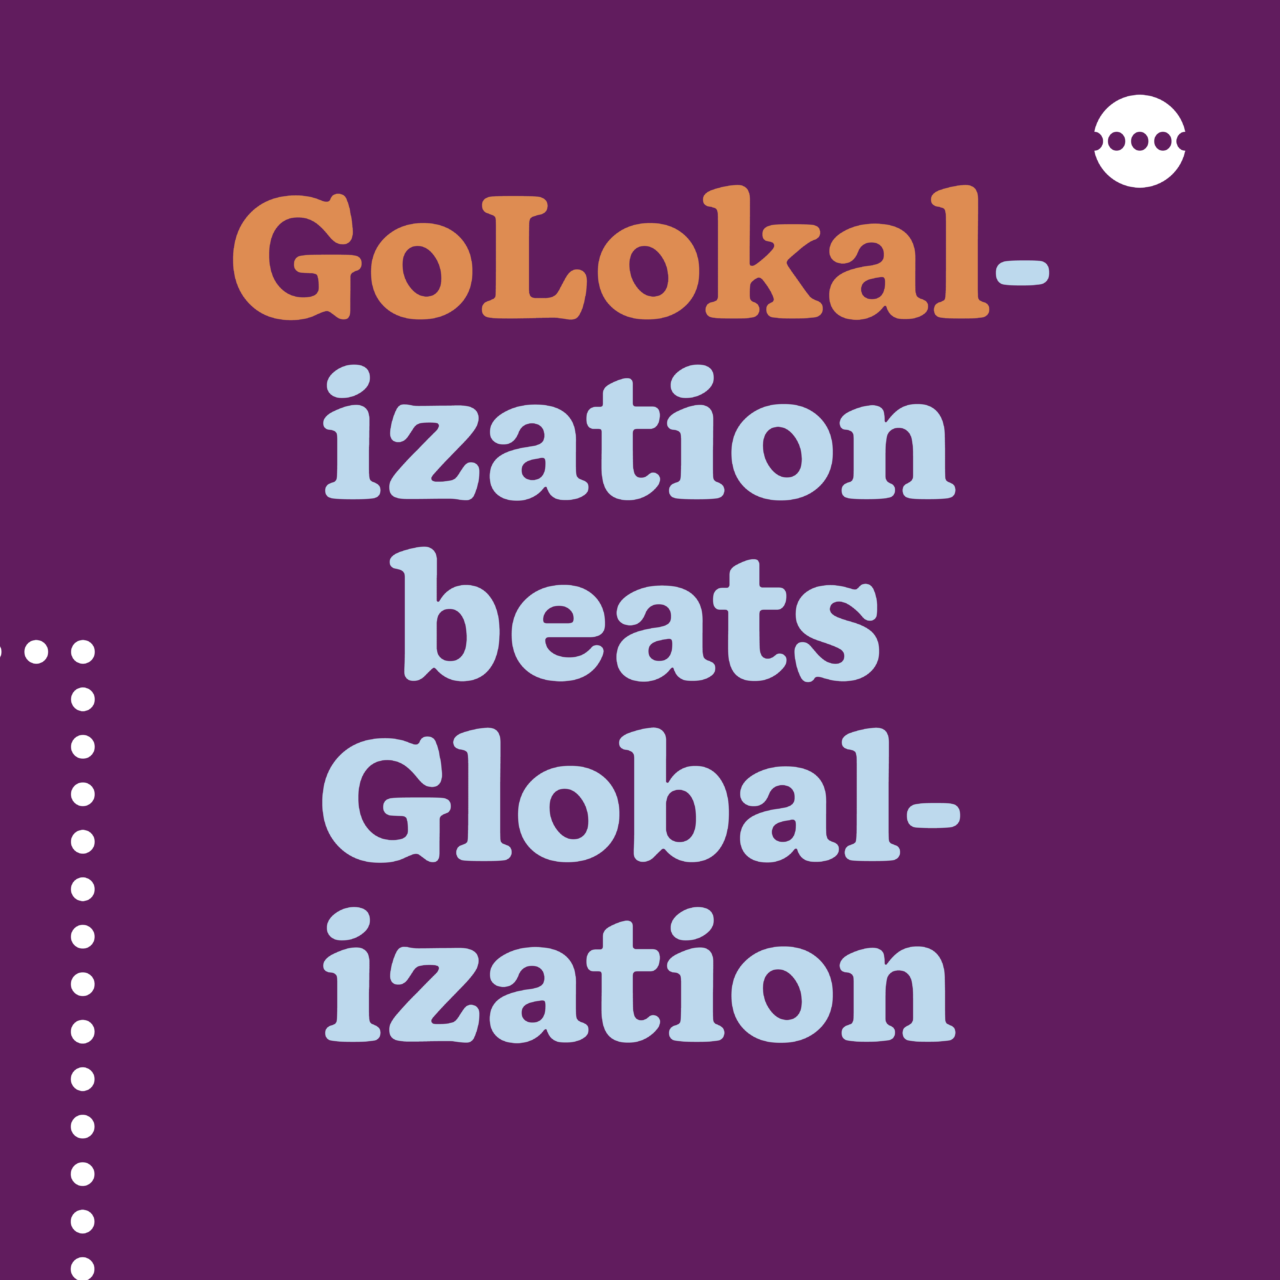 golokal beating globalization